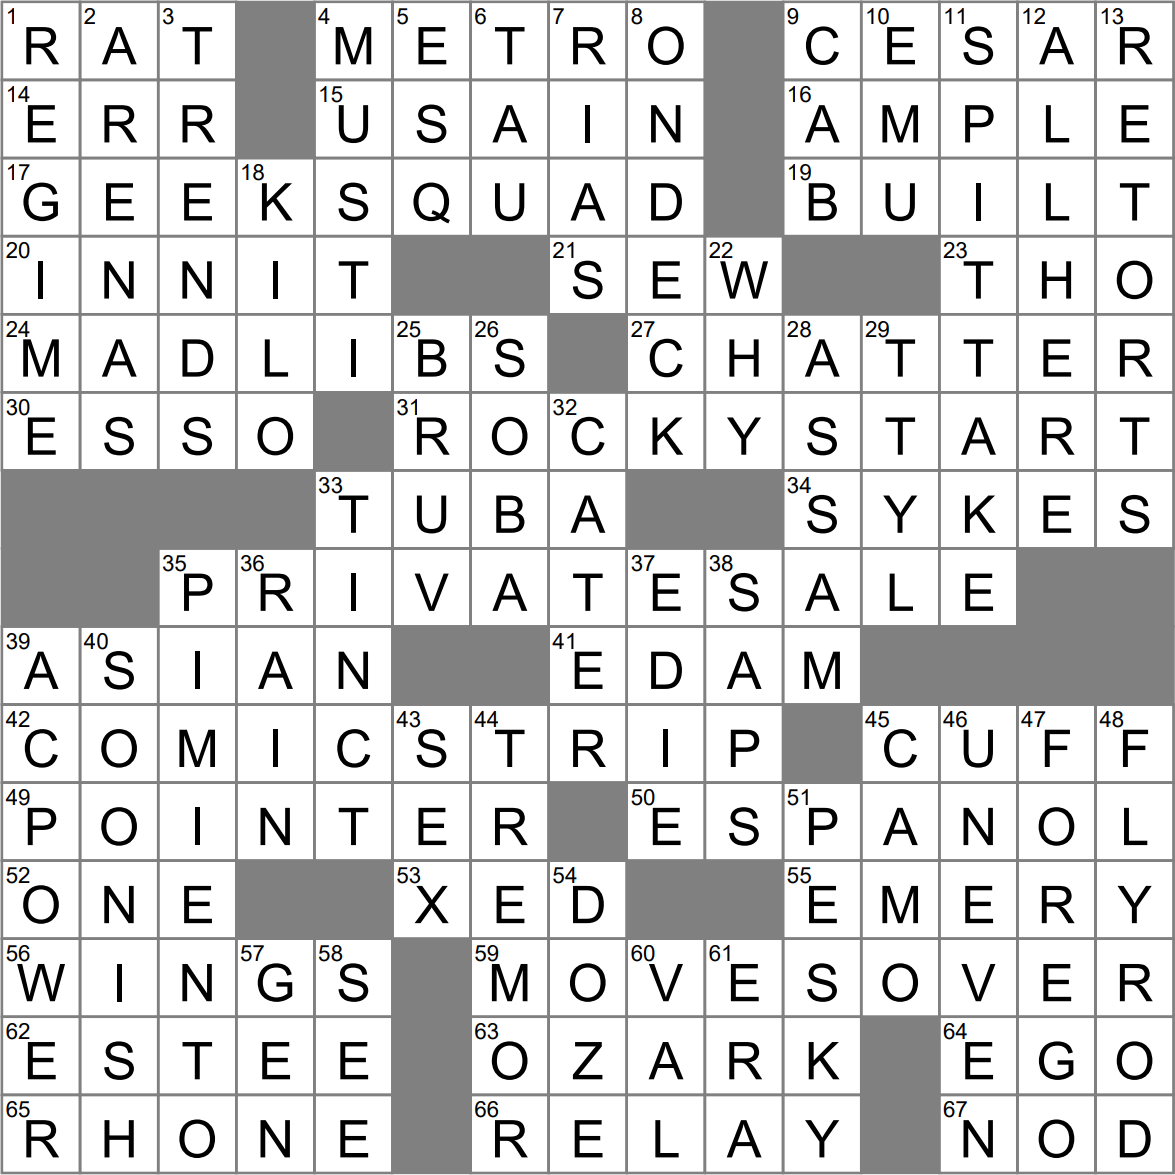 LA Times Crossword 12 May 23 Friday LAXCrossword com